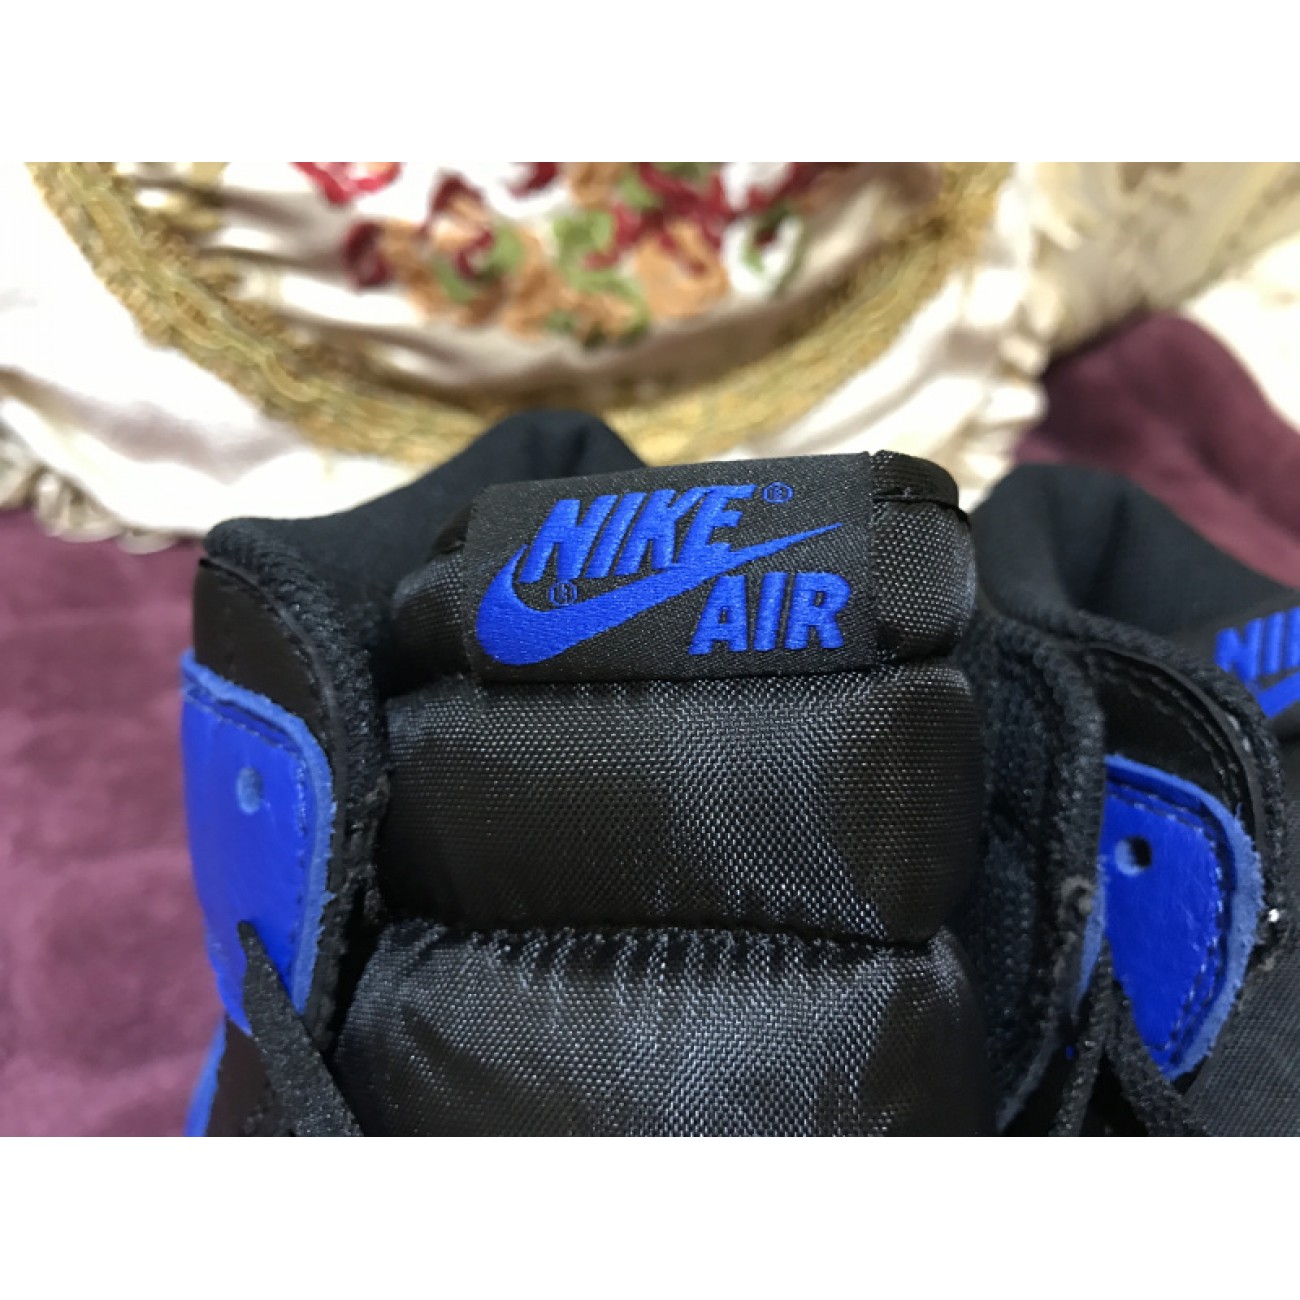 Air Jordan 1 OG High Retro Black/Royal Blue 555088-007